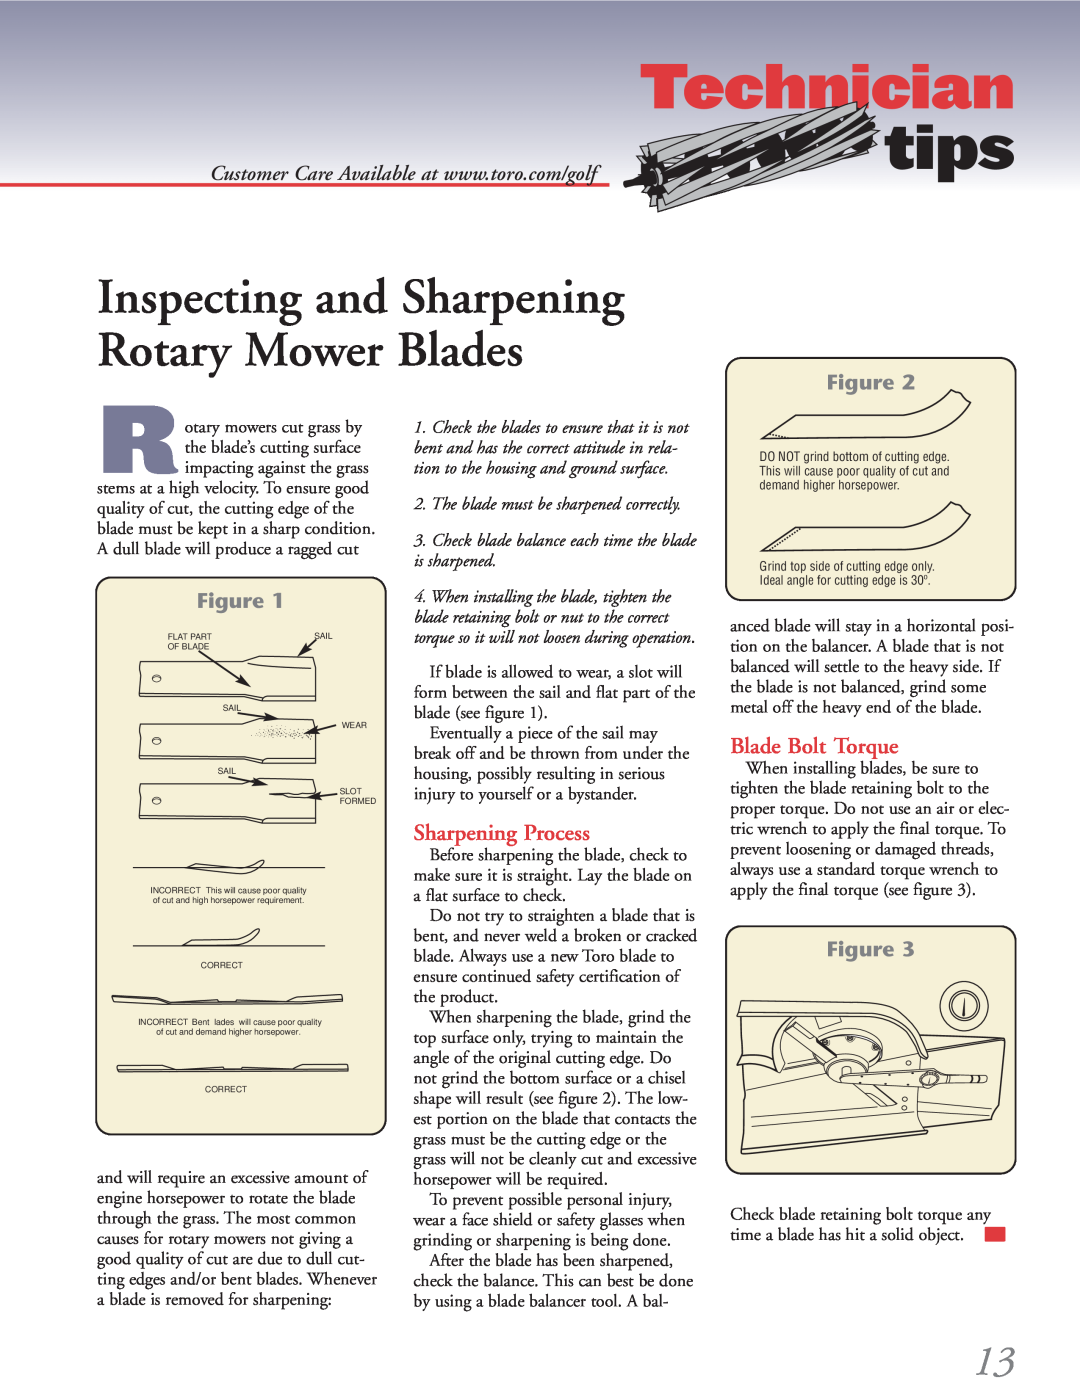 Toro 4500-D manual Inspecting and Sharpening Rotary Mower Blades, Sharpening Process, Blade Bolt Torque, Technician, tips 